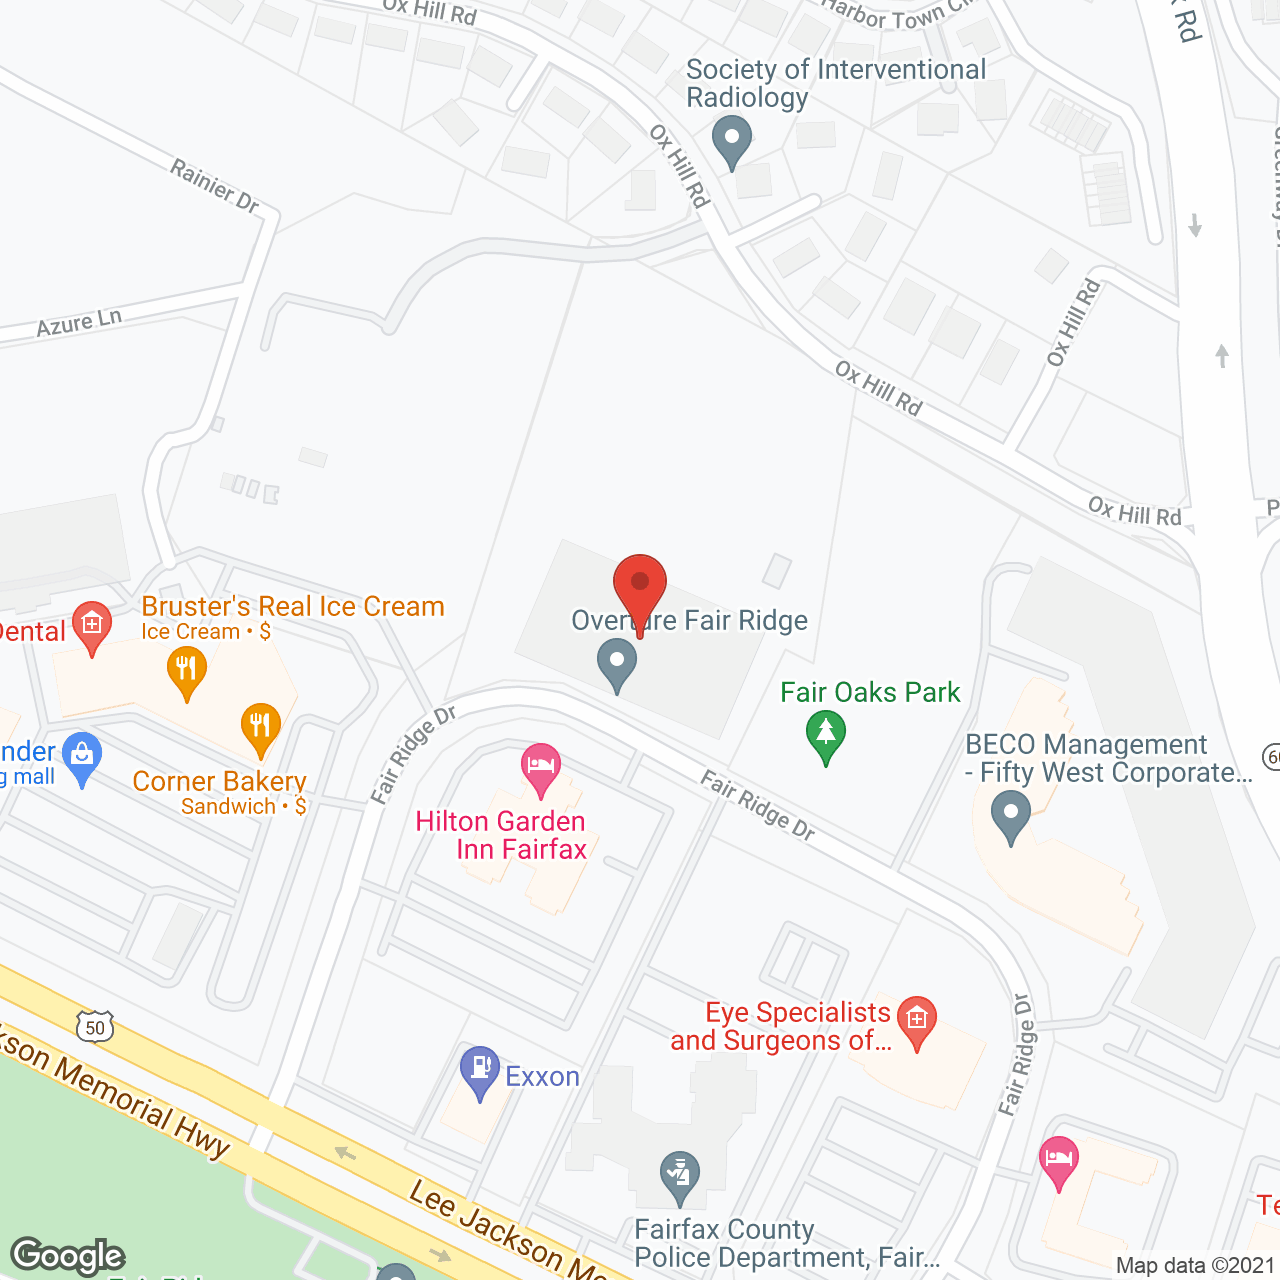 Overture Fair Ridge 62+ Apartment Homes in google map